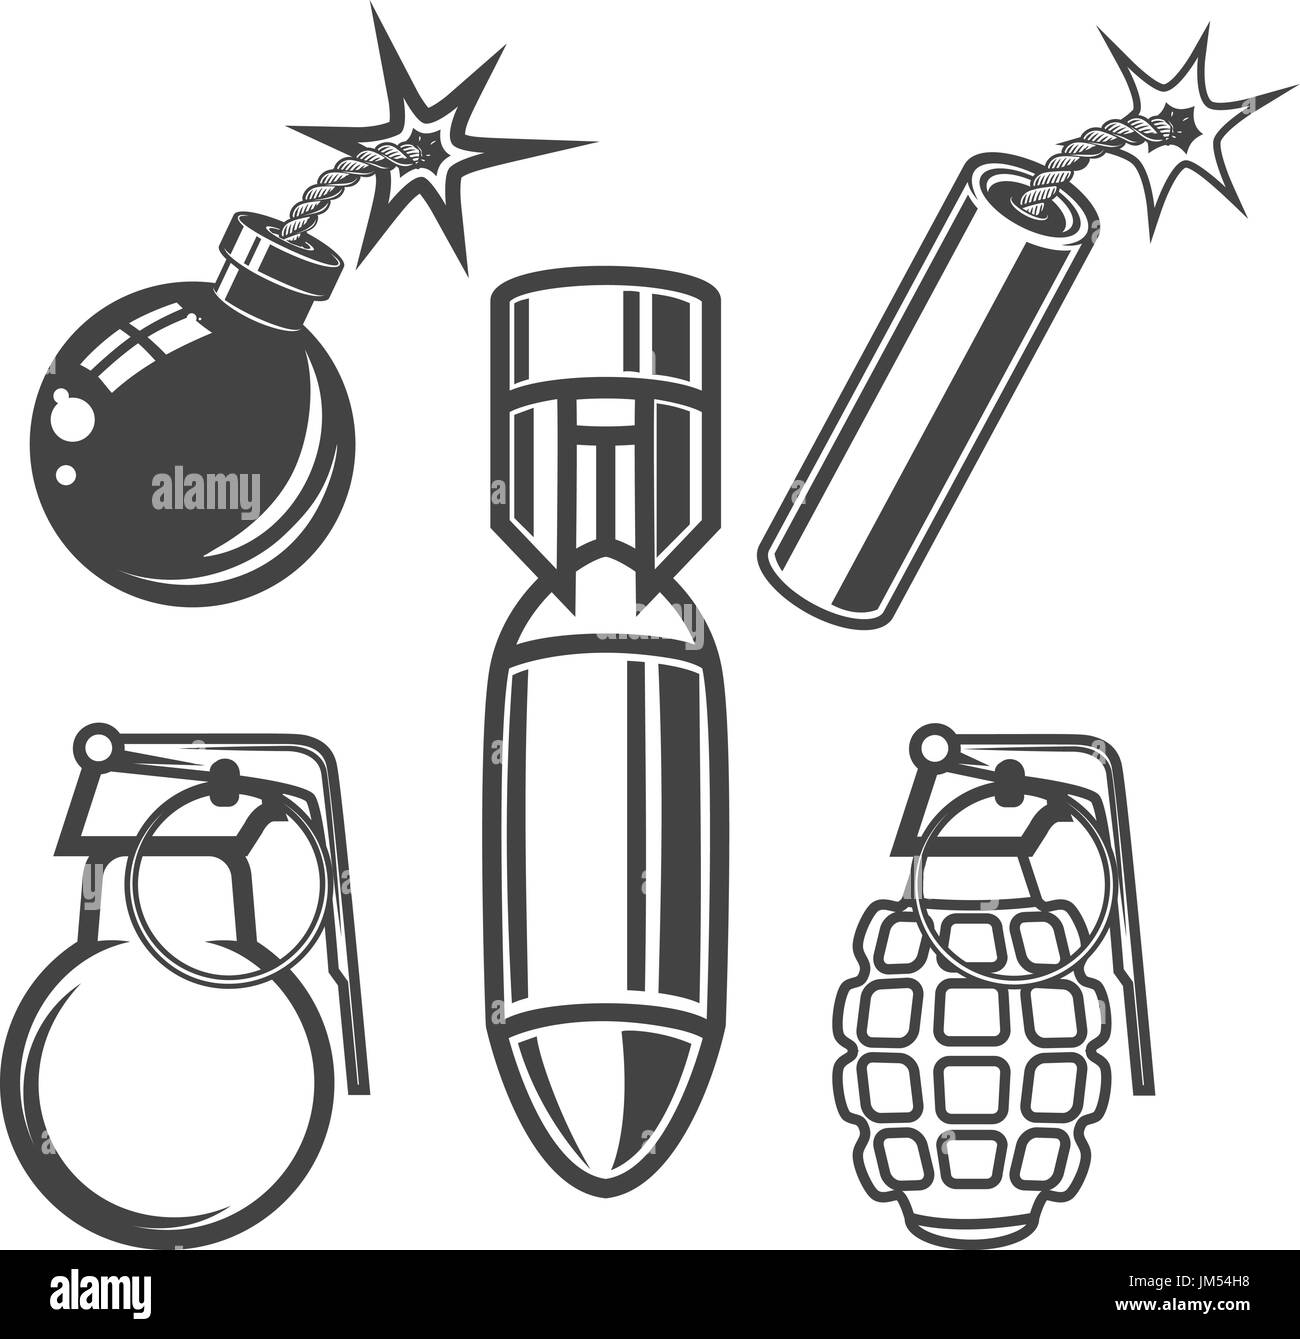 Jeu de bombe, grenade, dynamite stick illustrations sur fond blanc. Vector illustration Illustration de Vecteur